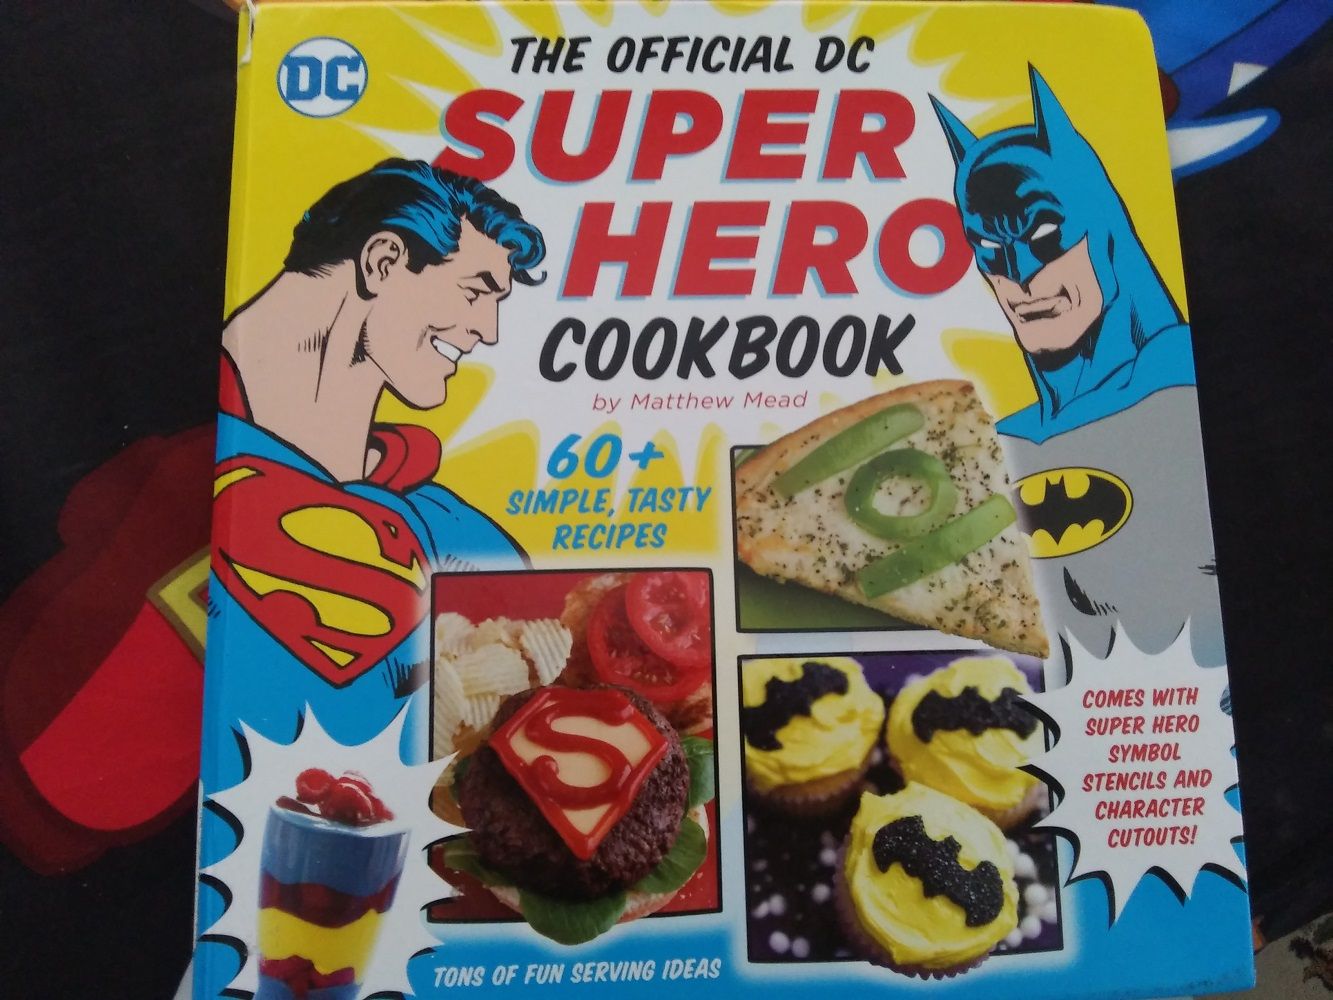 Author photo of a copy of The Official DC Superhero Cookbook